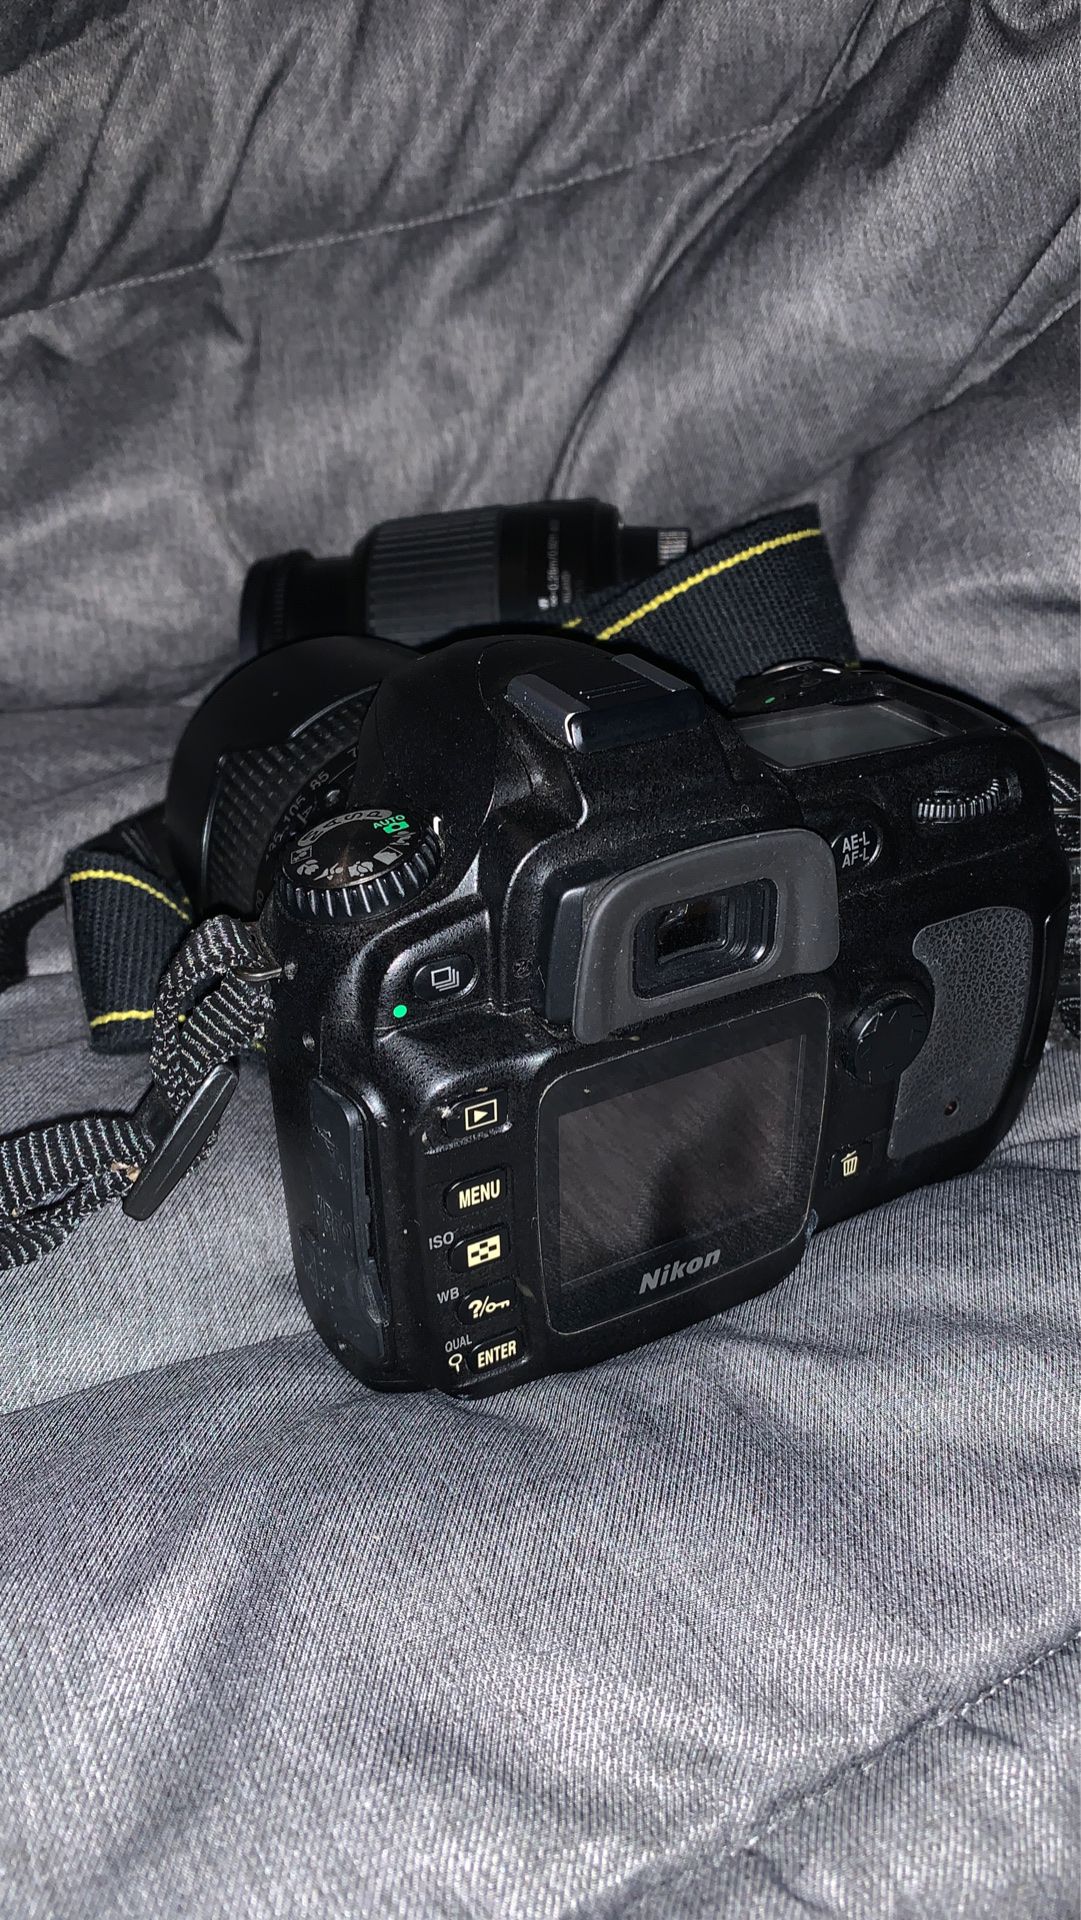 Nikon d5 digital camera